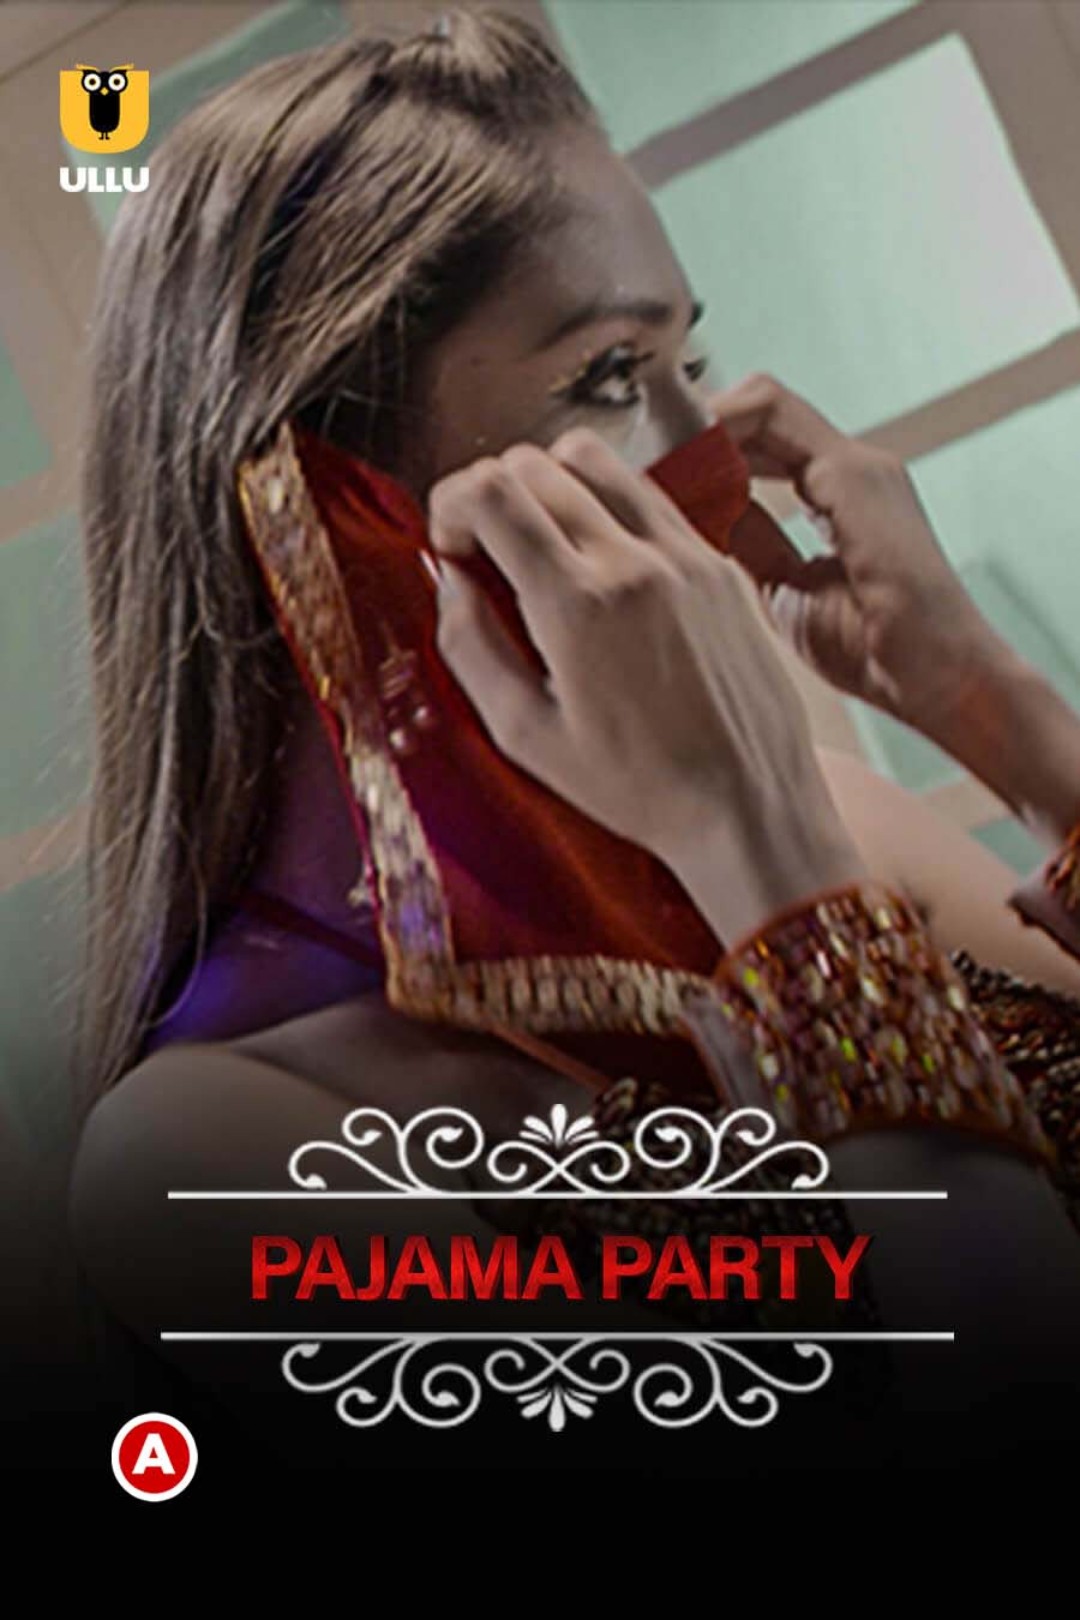 Pajama Party (Charmsukh) (2019) 720p HDRip Ullu Hindi Web Series [180MB]